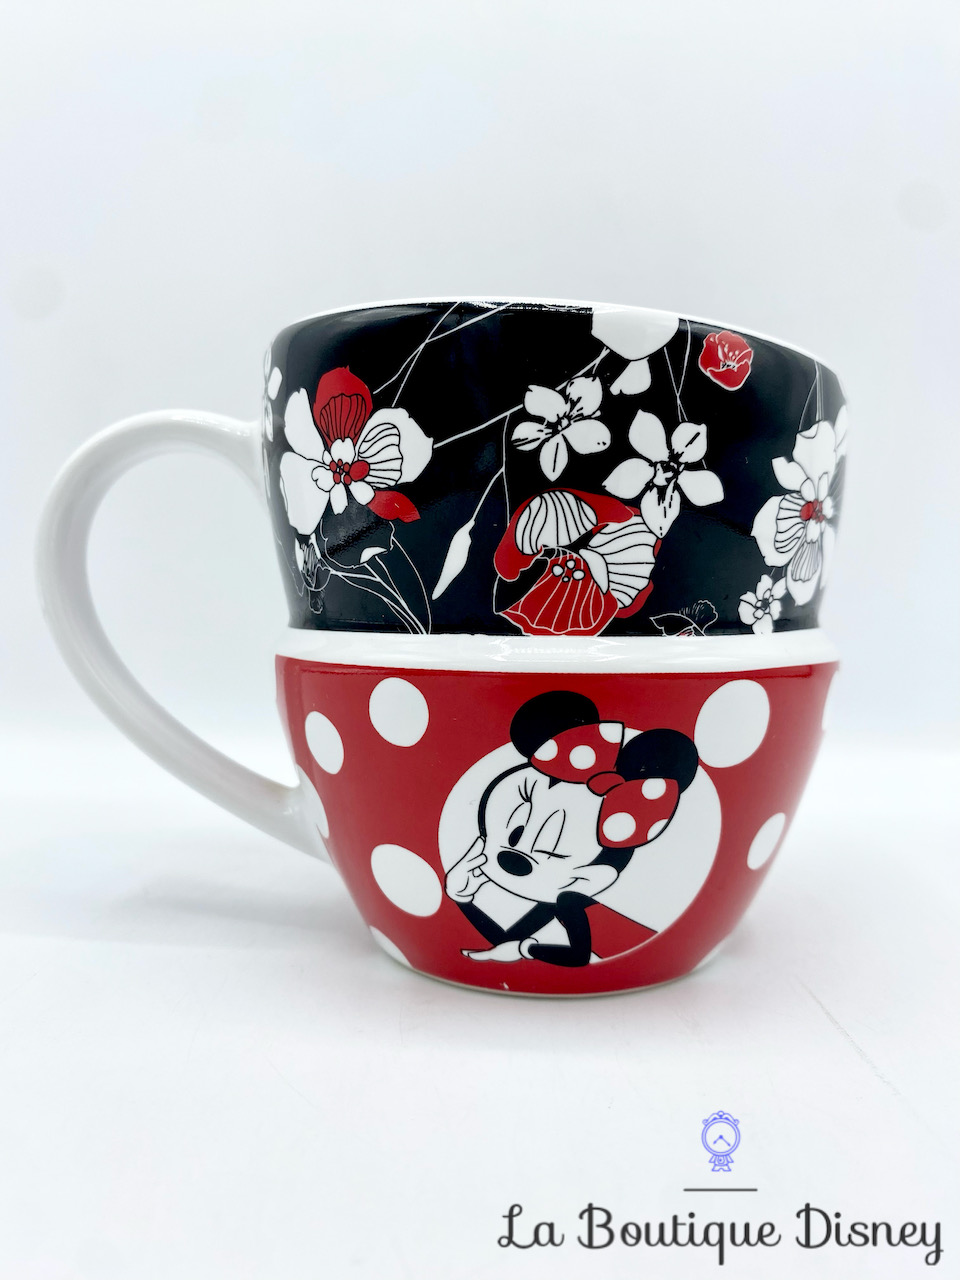 Tasse Minnie Parisienne Disneyland Paris Disney mug empilé fleurs blanc noir rouge